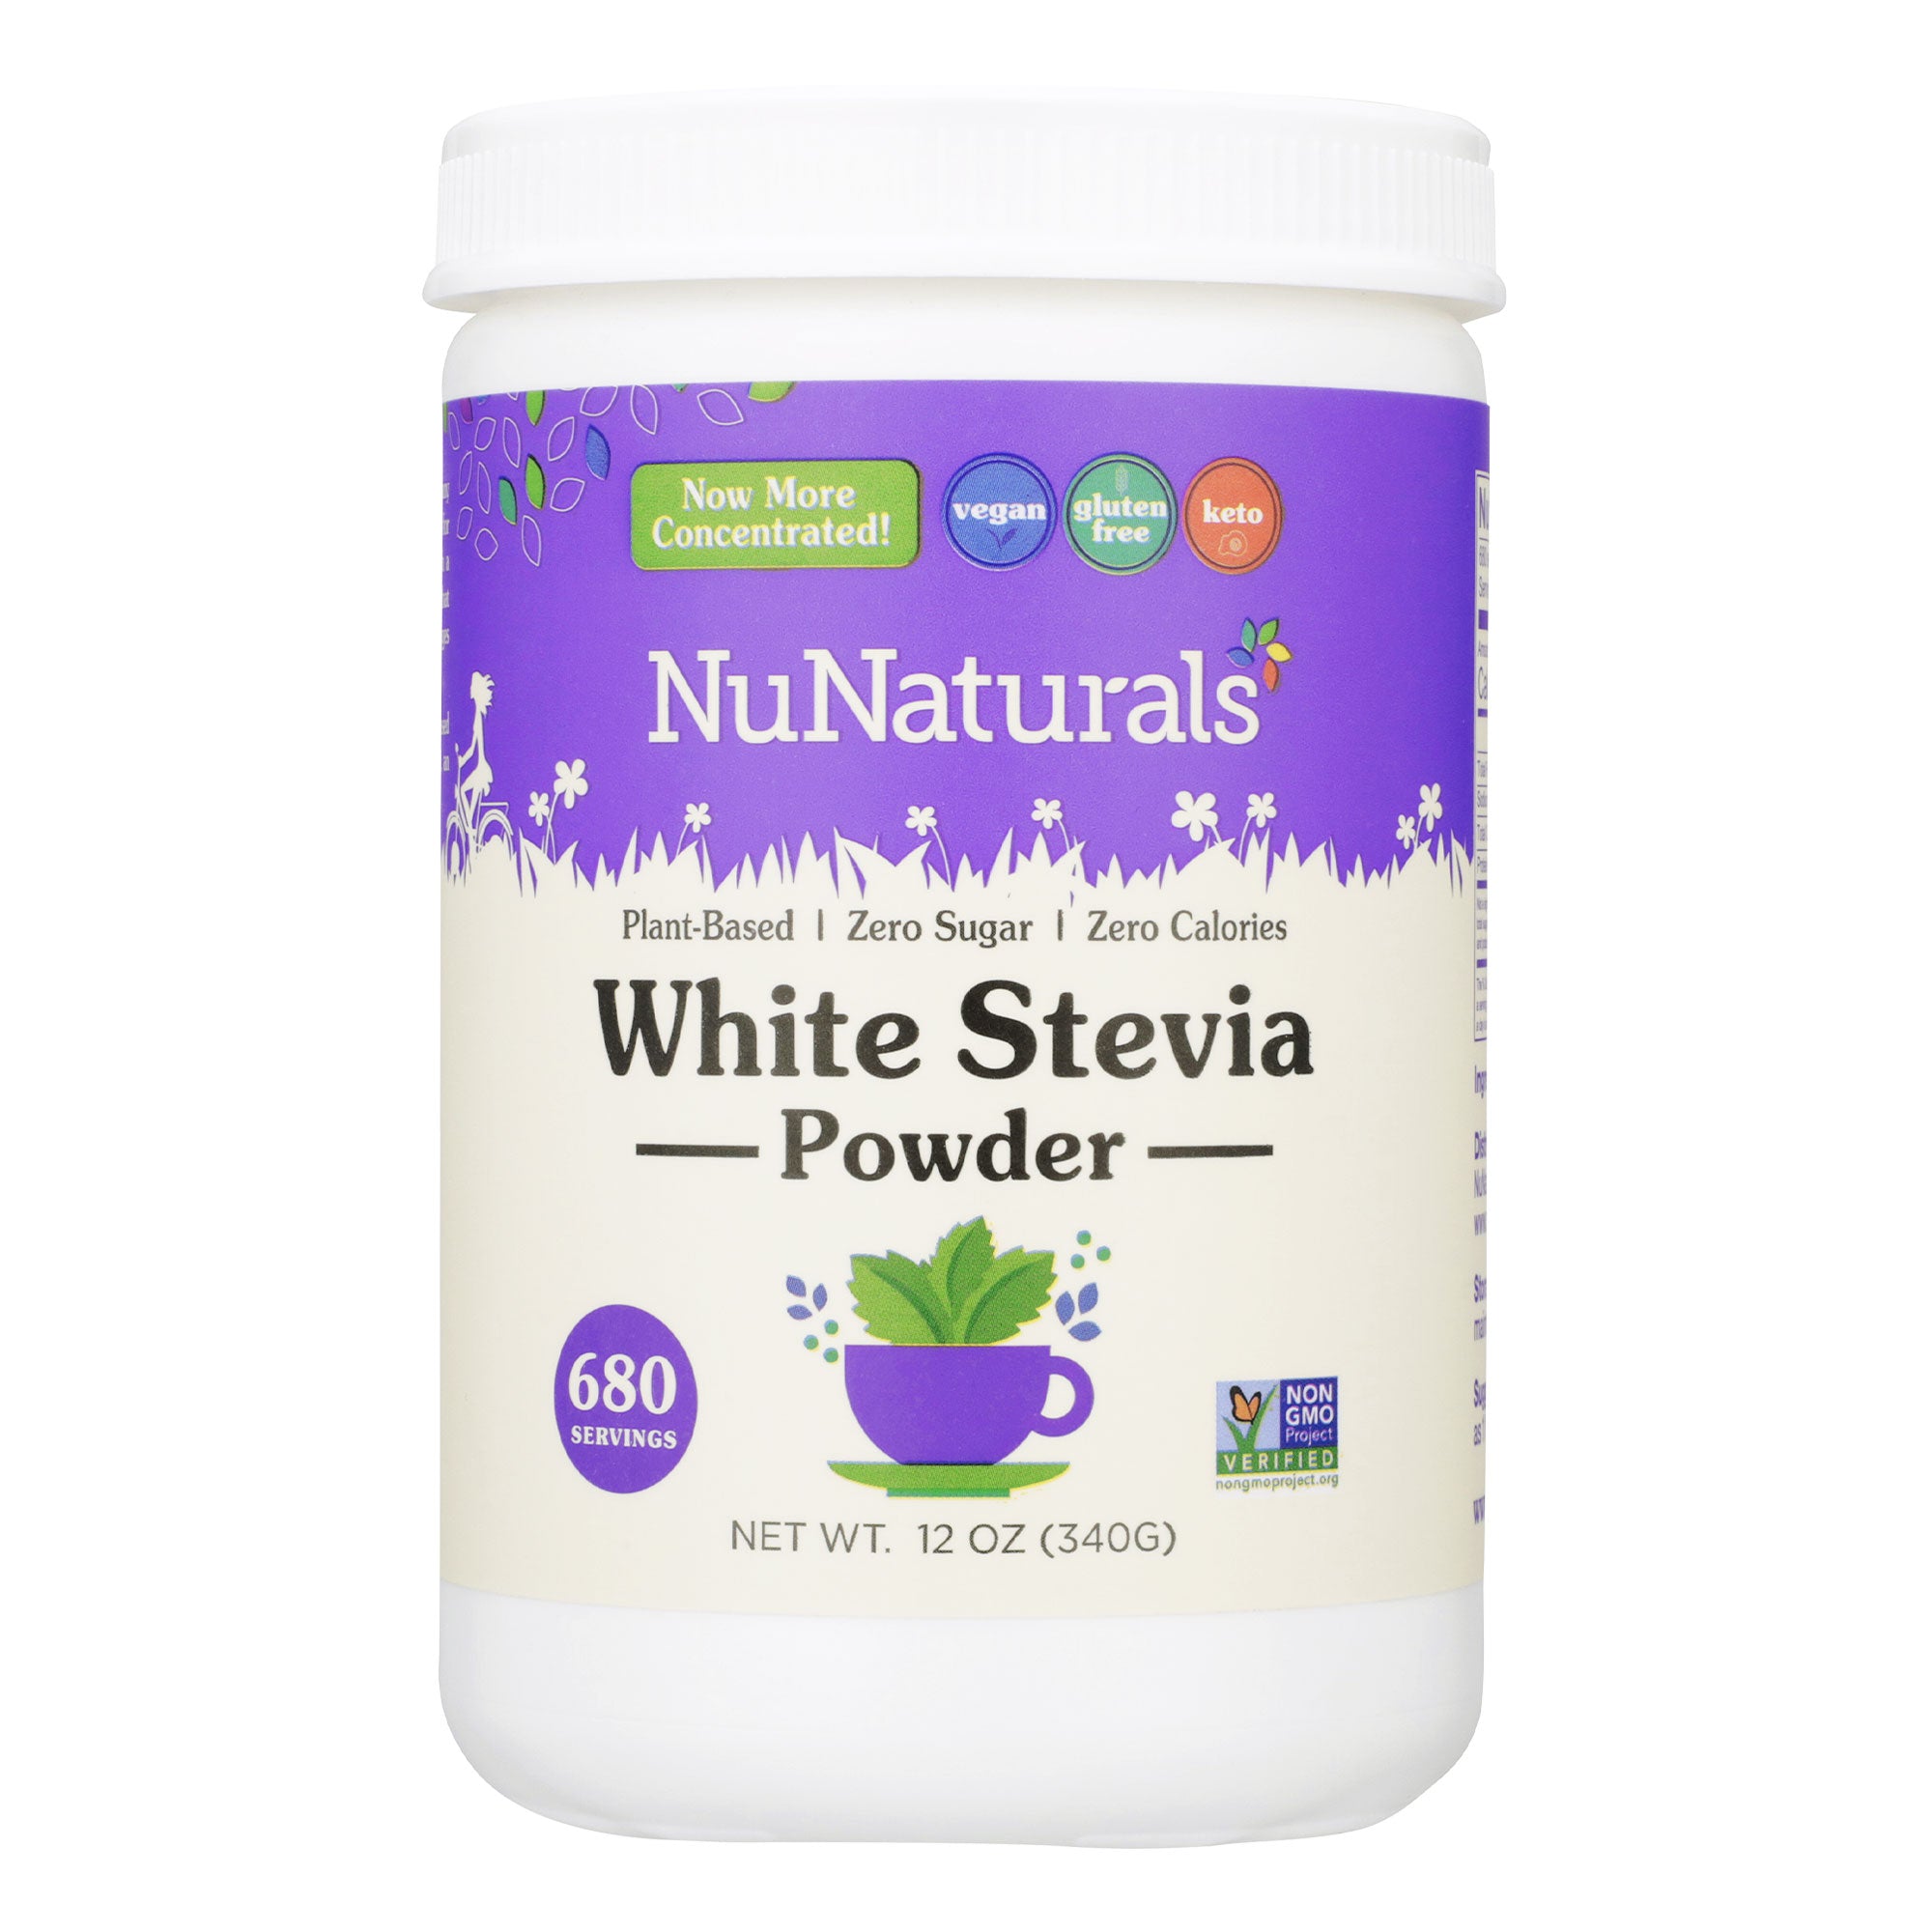 NuNaturals NuStevia White Stevia Powder